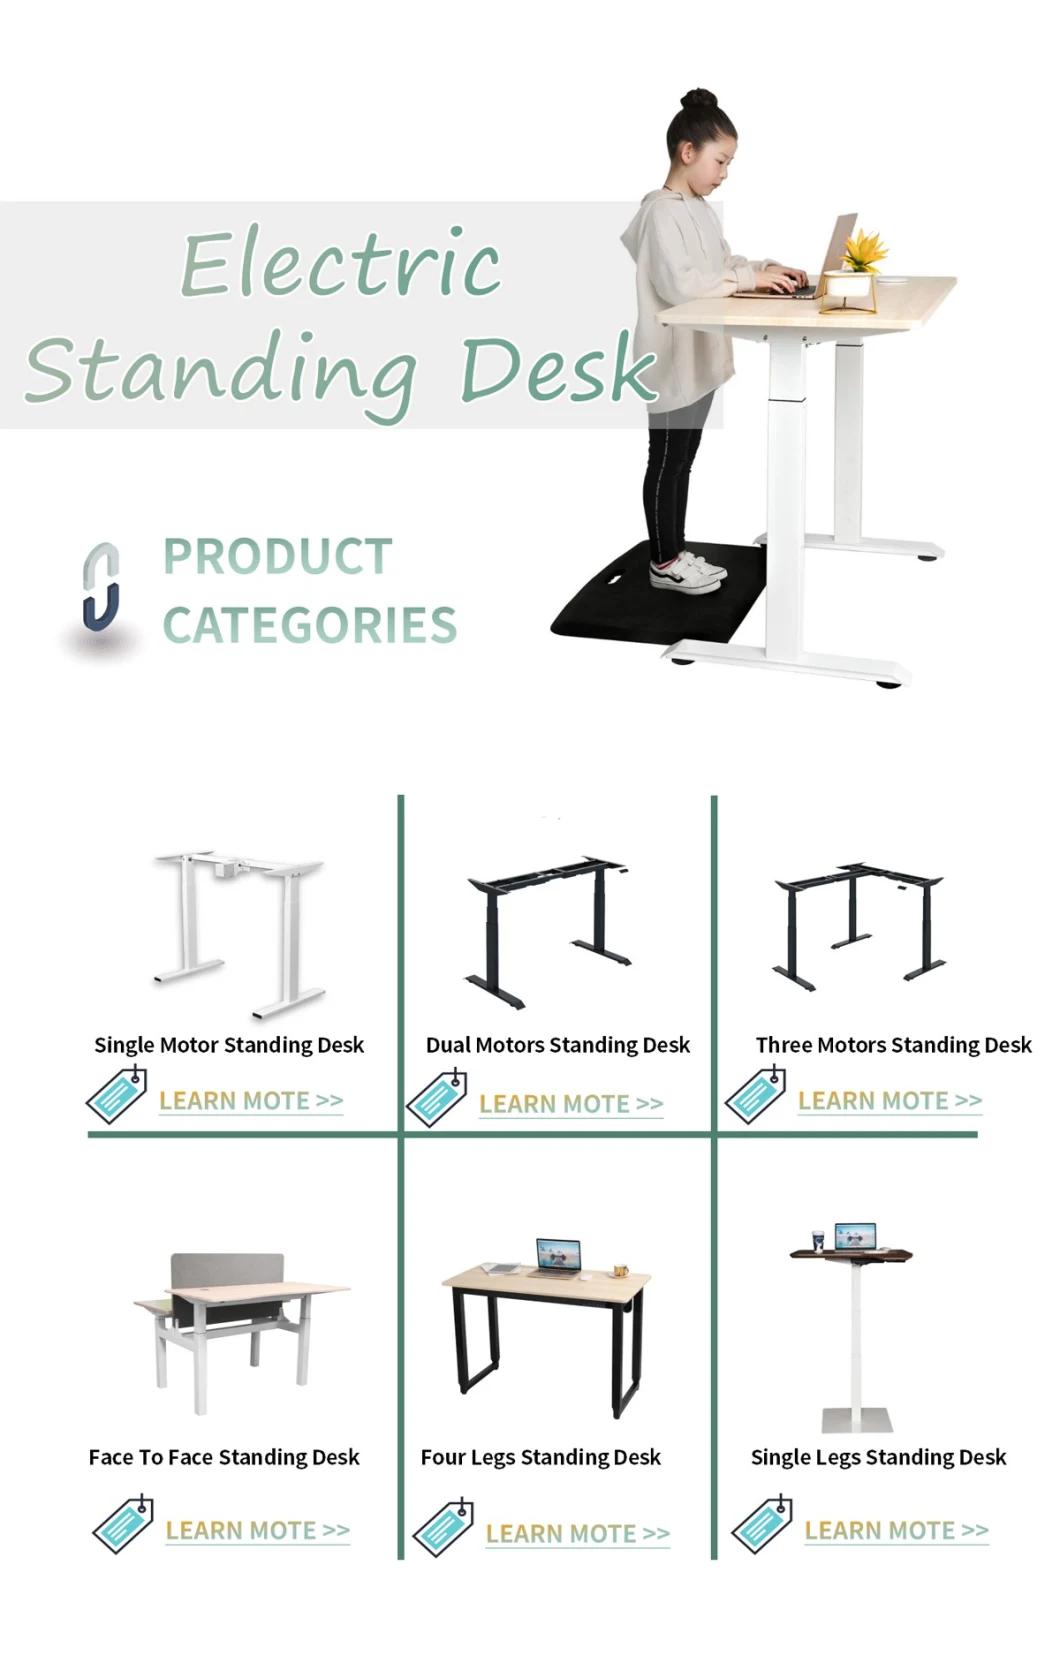 Manual Height Adjustable Black Color Table Frame Office Desk Ada